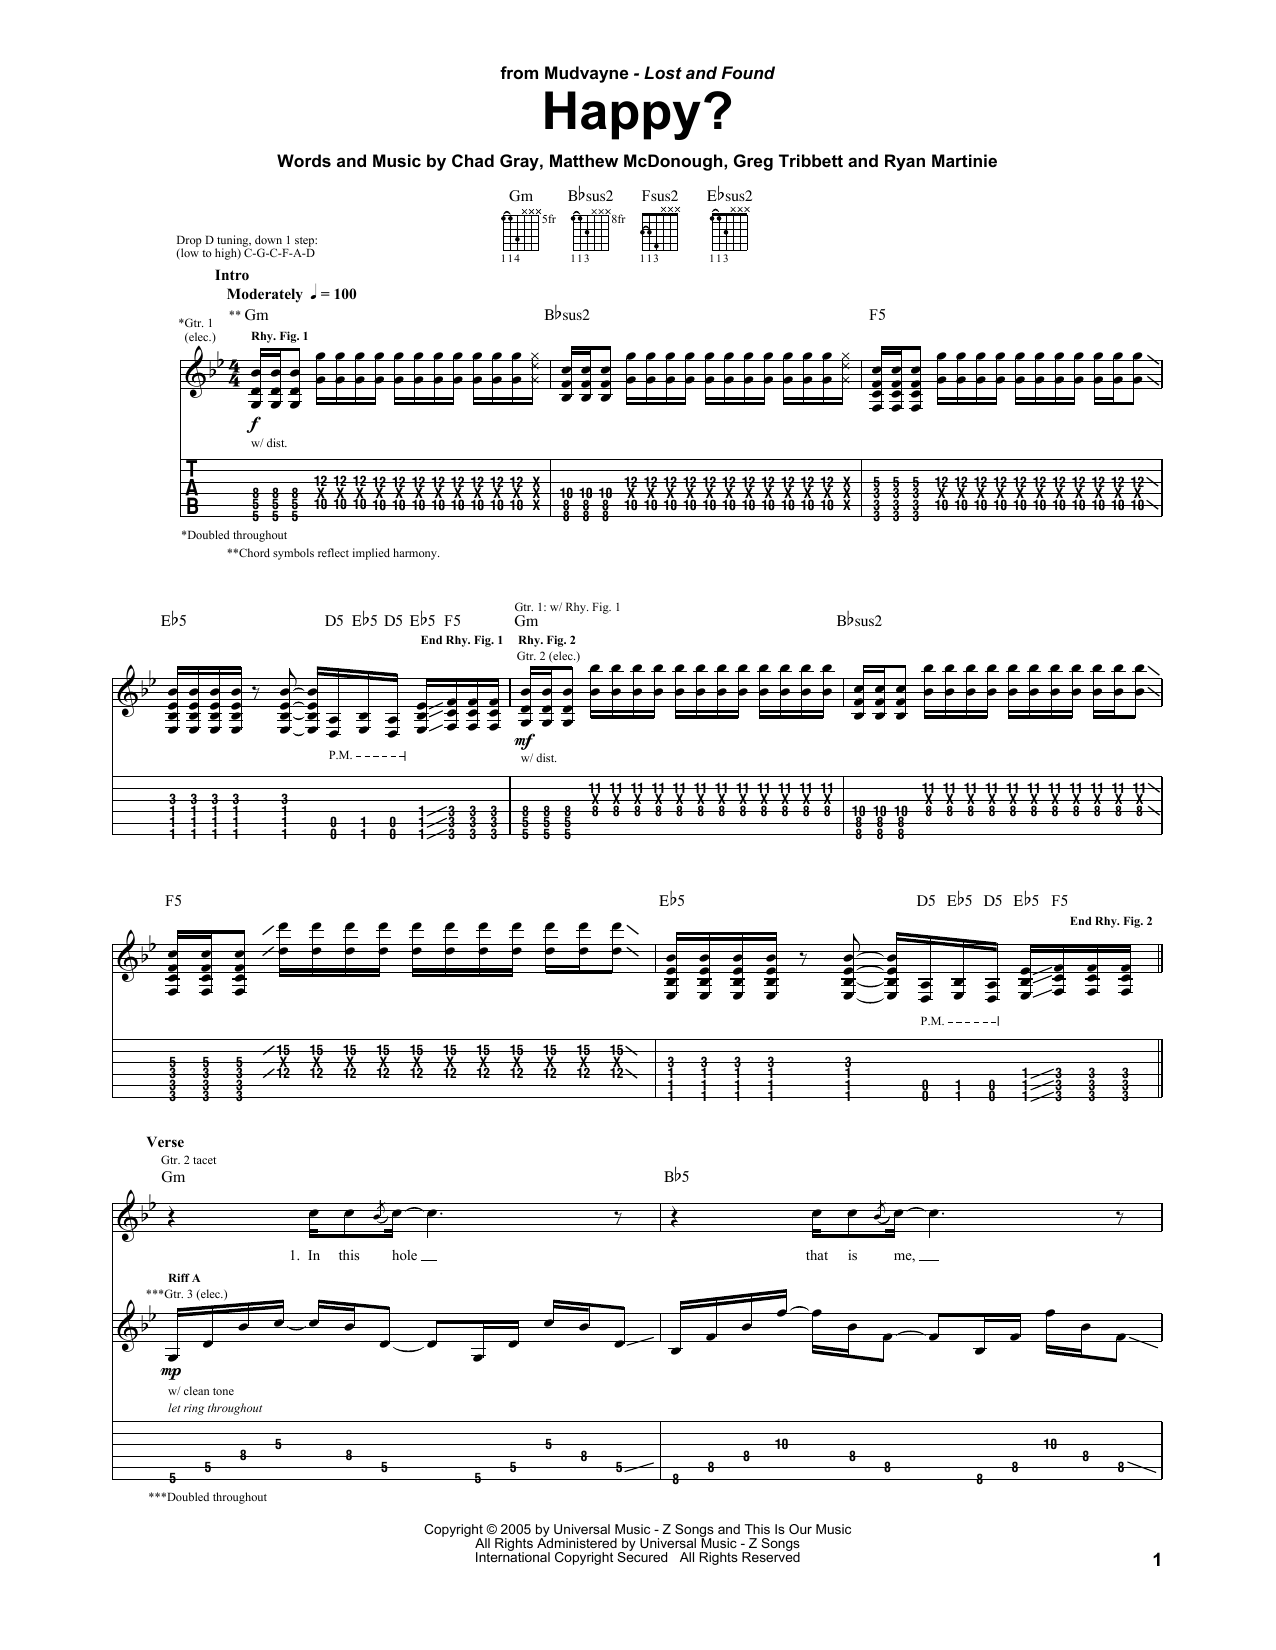 Mudvayne Happy? Sheet Music Notes & Chords for Bass Guitar Tab - Download or Print PDF